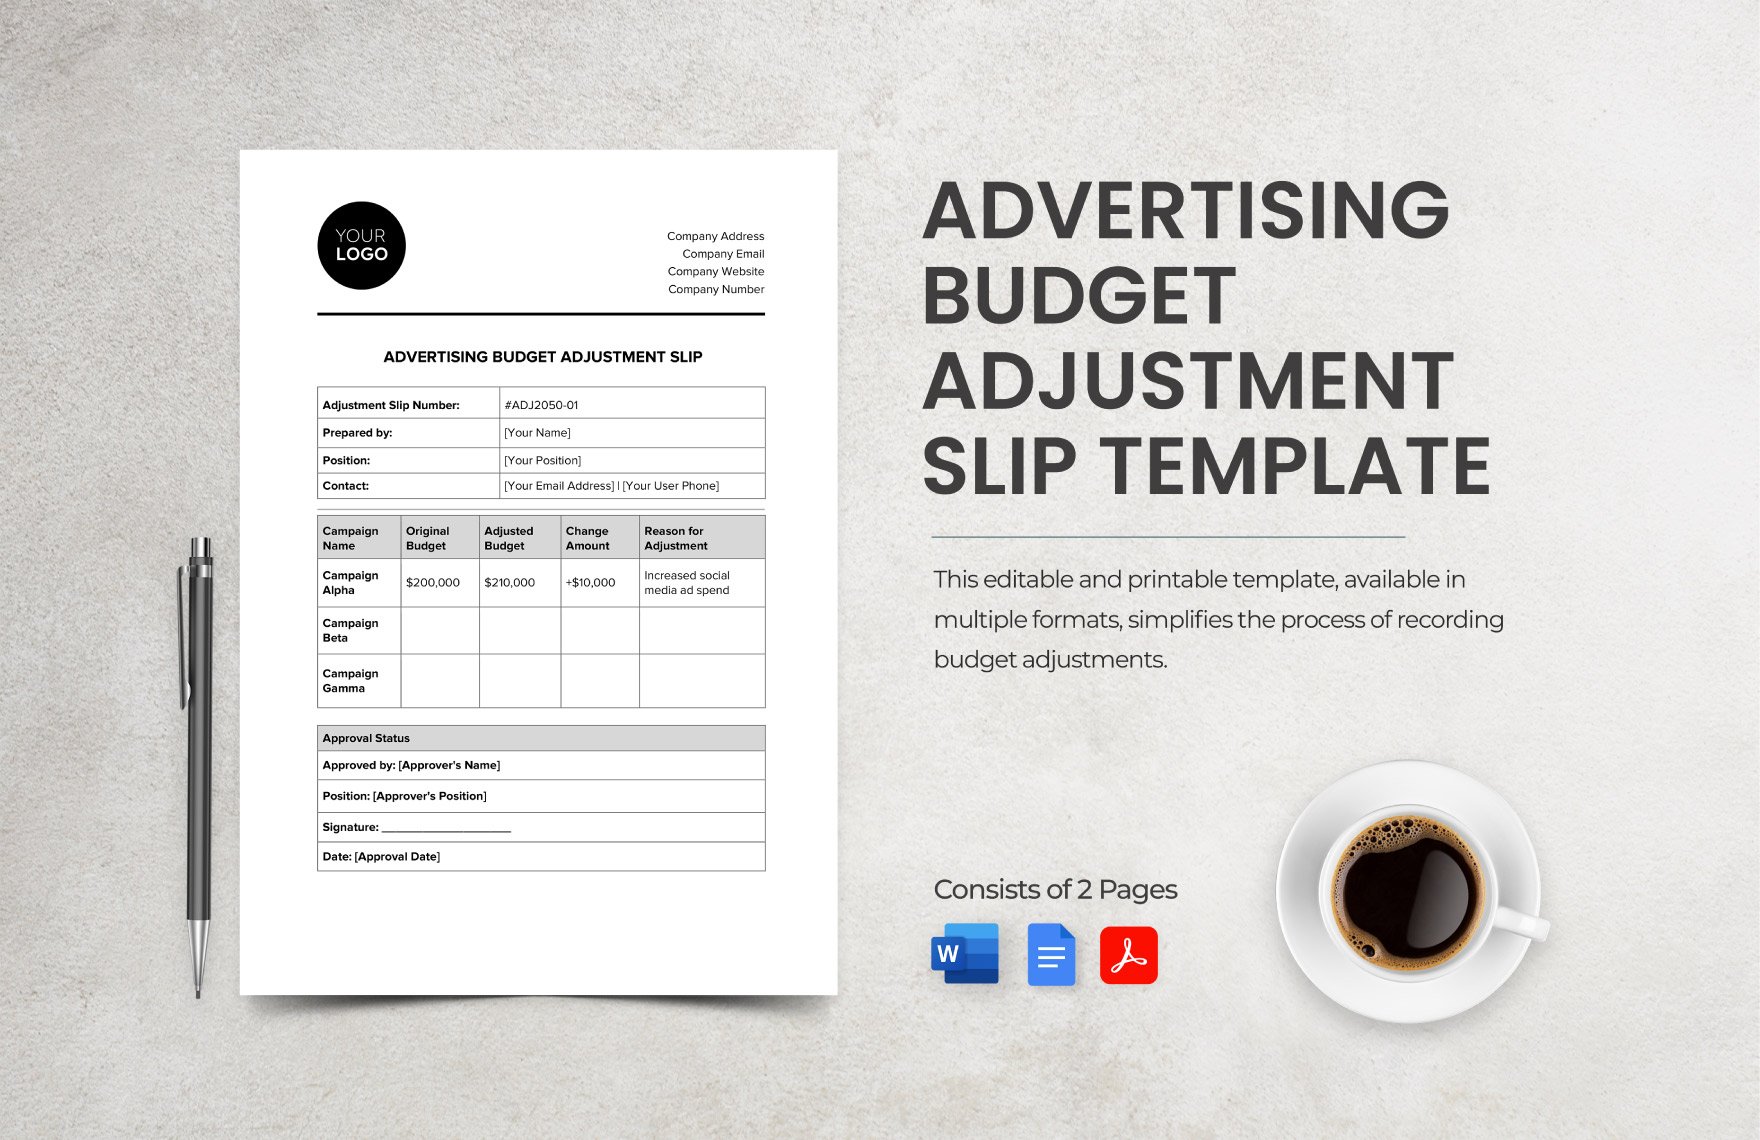 Advertising Budget Adjustment Slip Template in Word, Google Docs, PDF